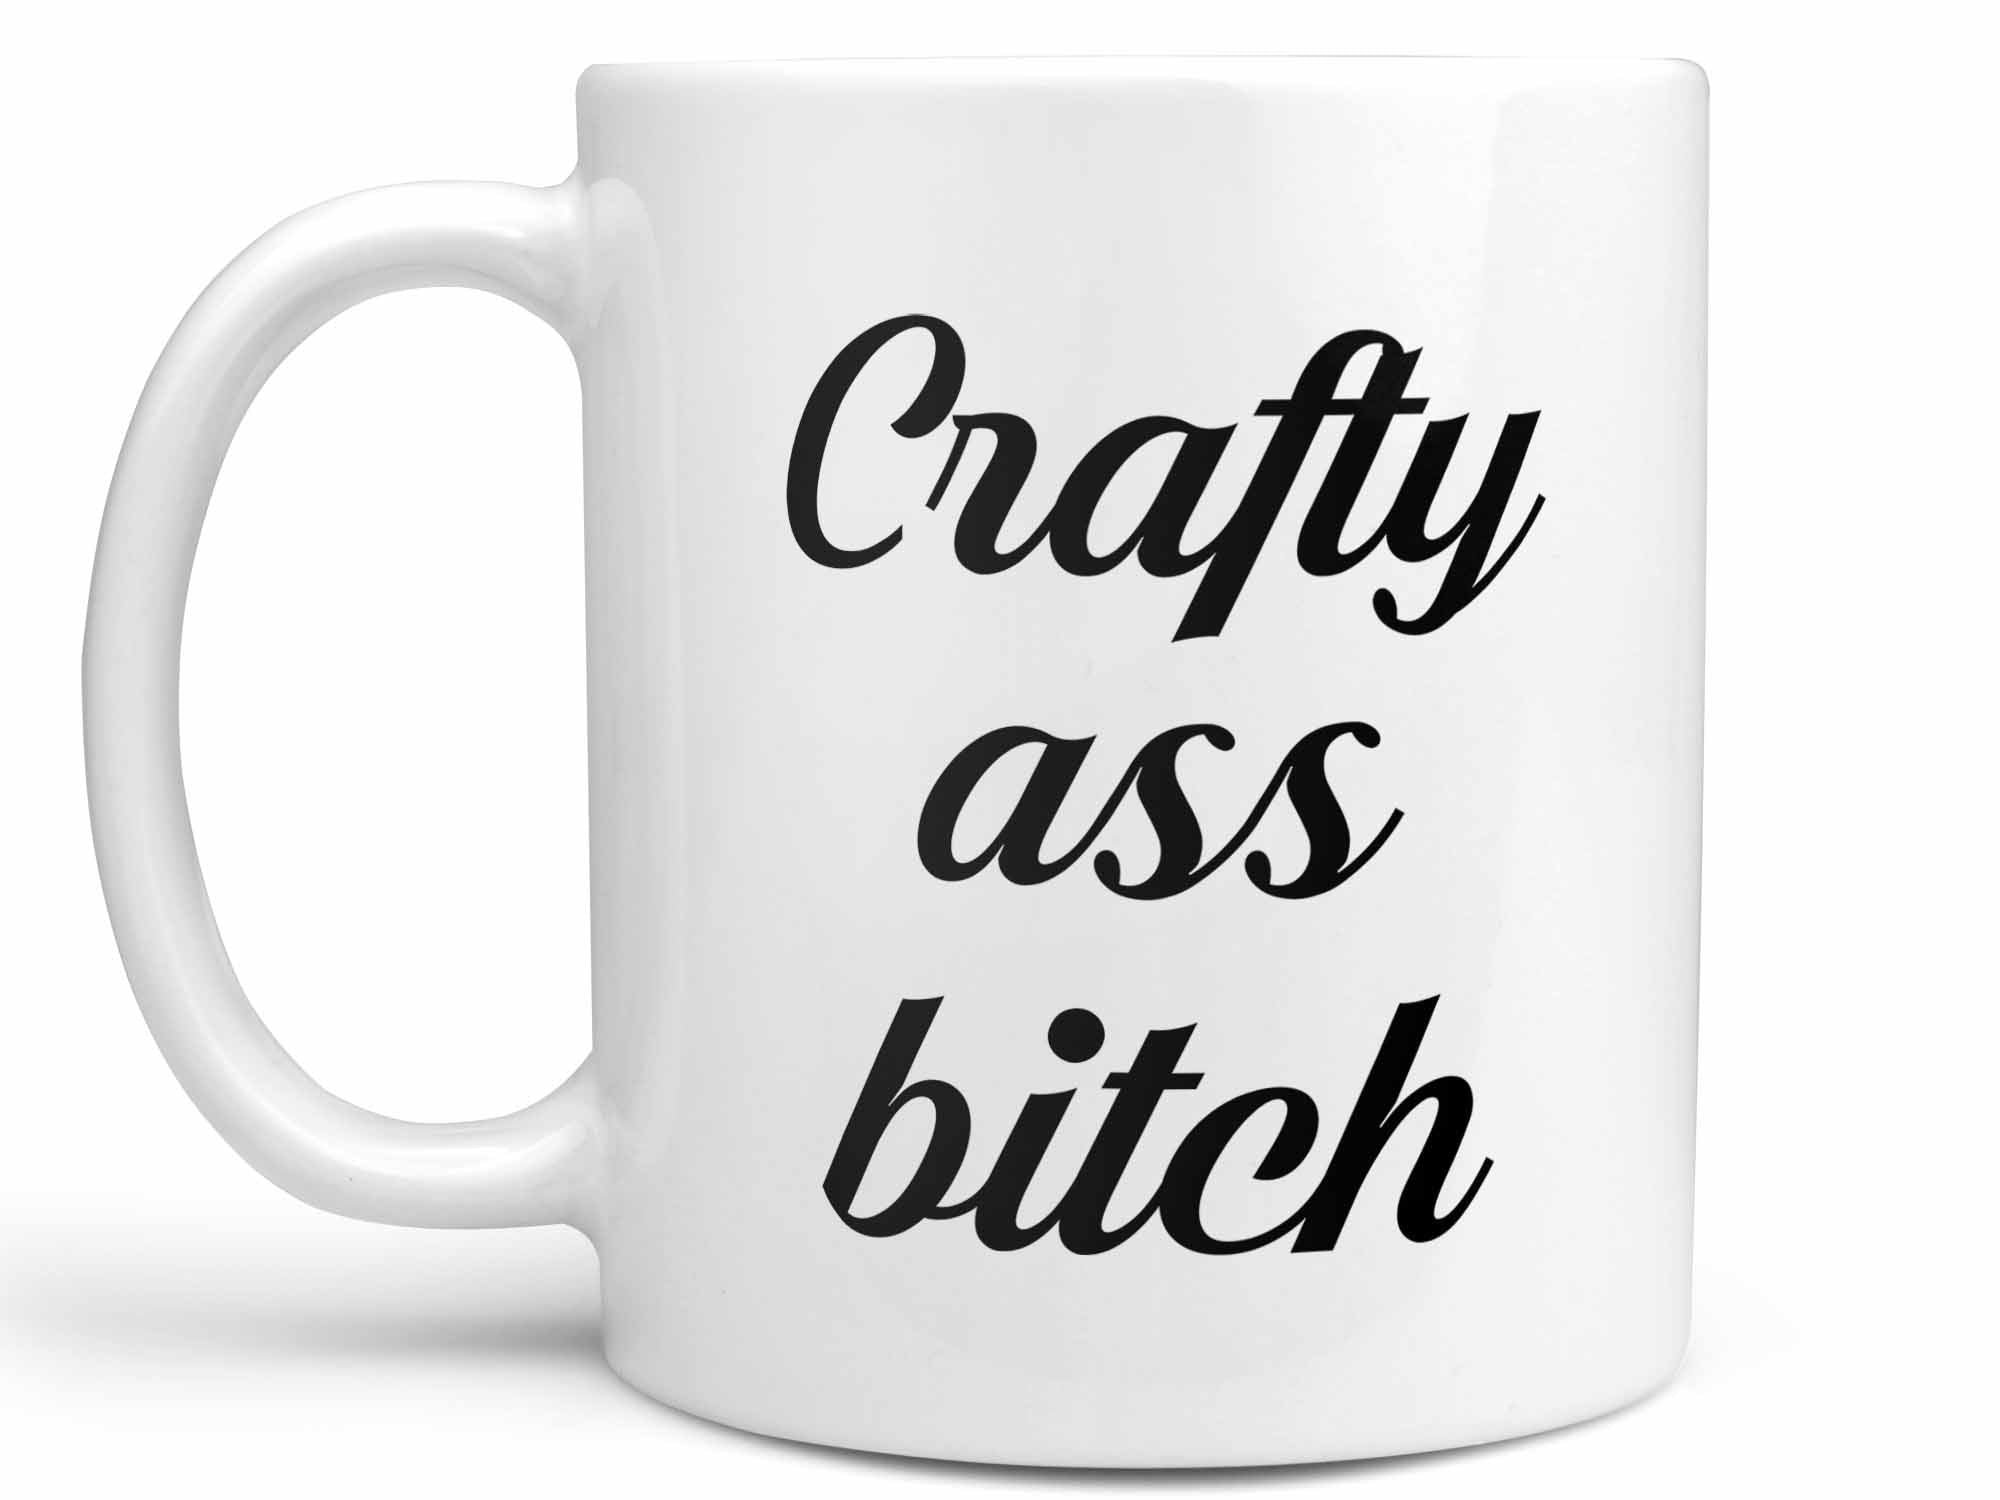 Crafty Ass Bitch Coffee Mug